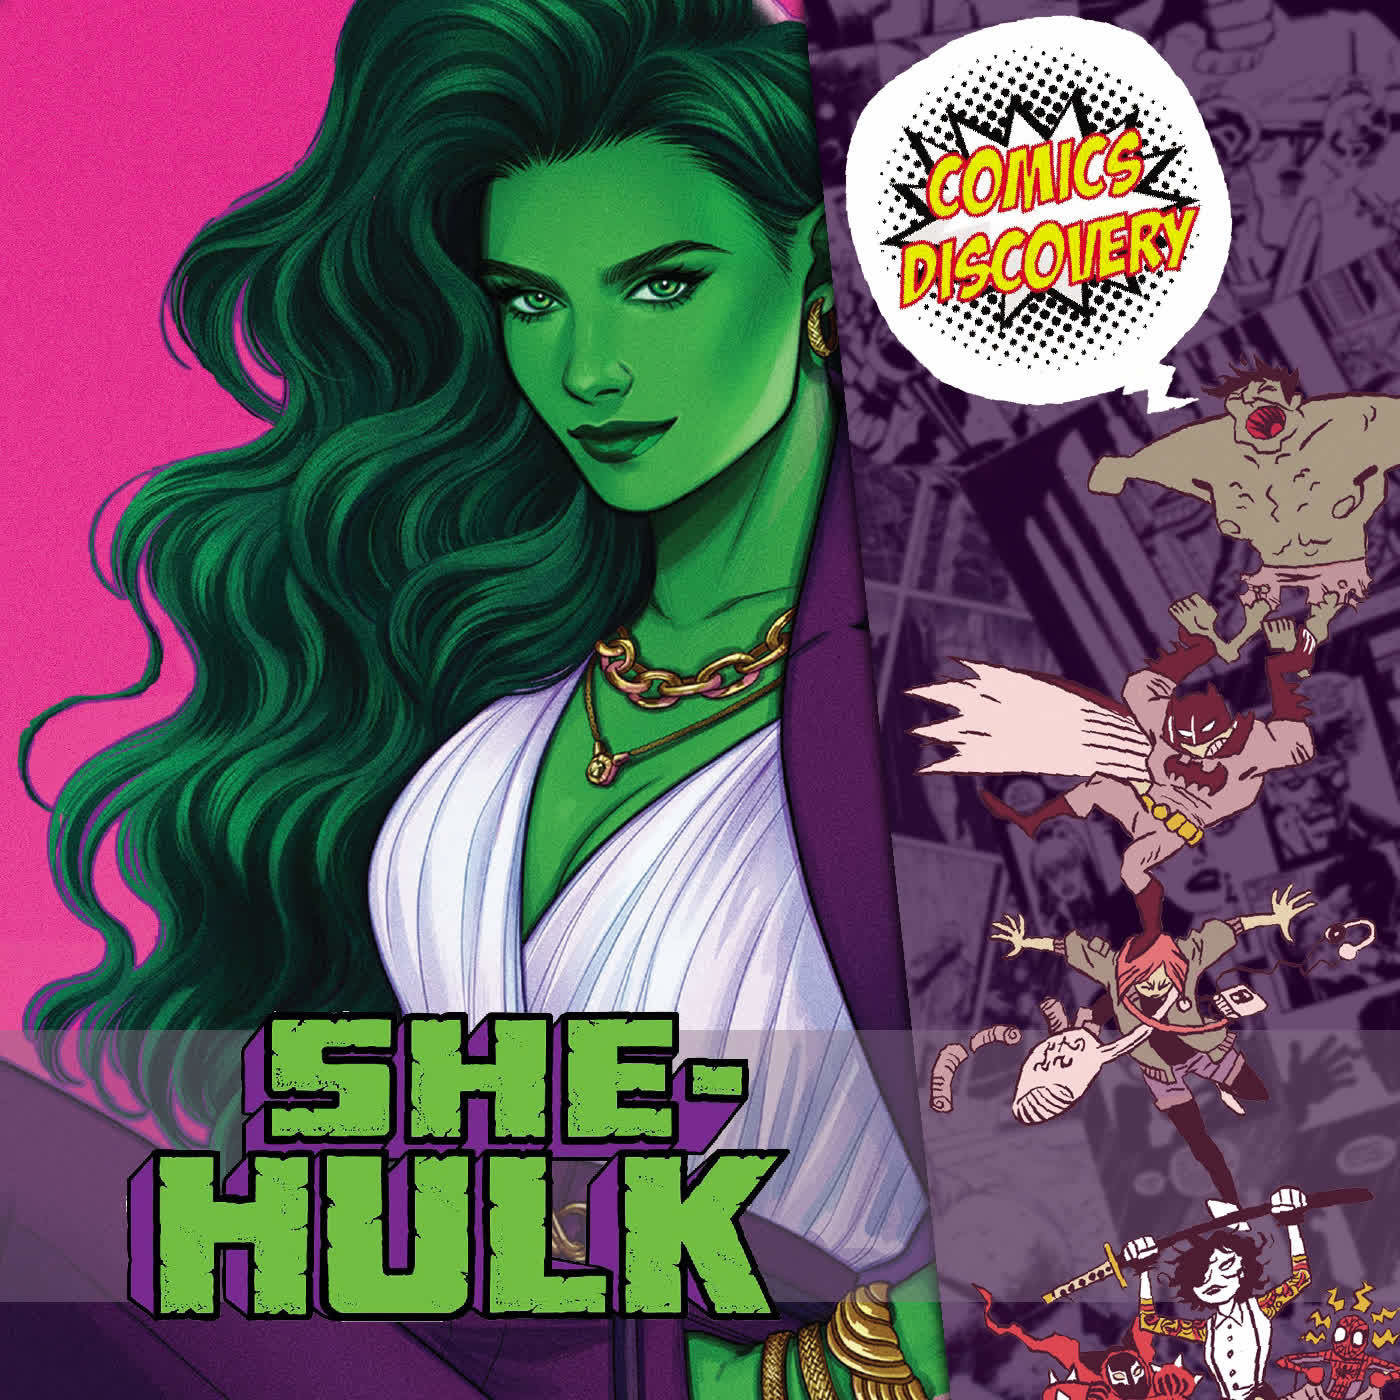 ComicsDiscovery S07E04 : She Hulk